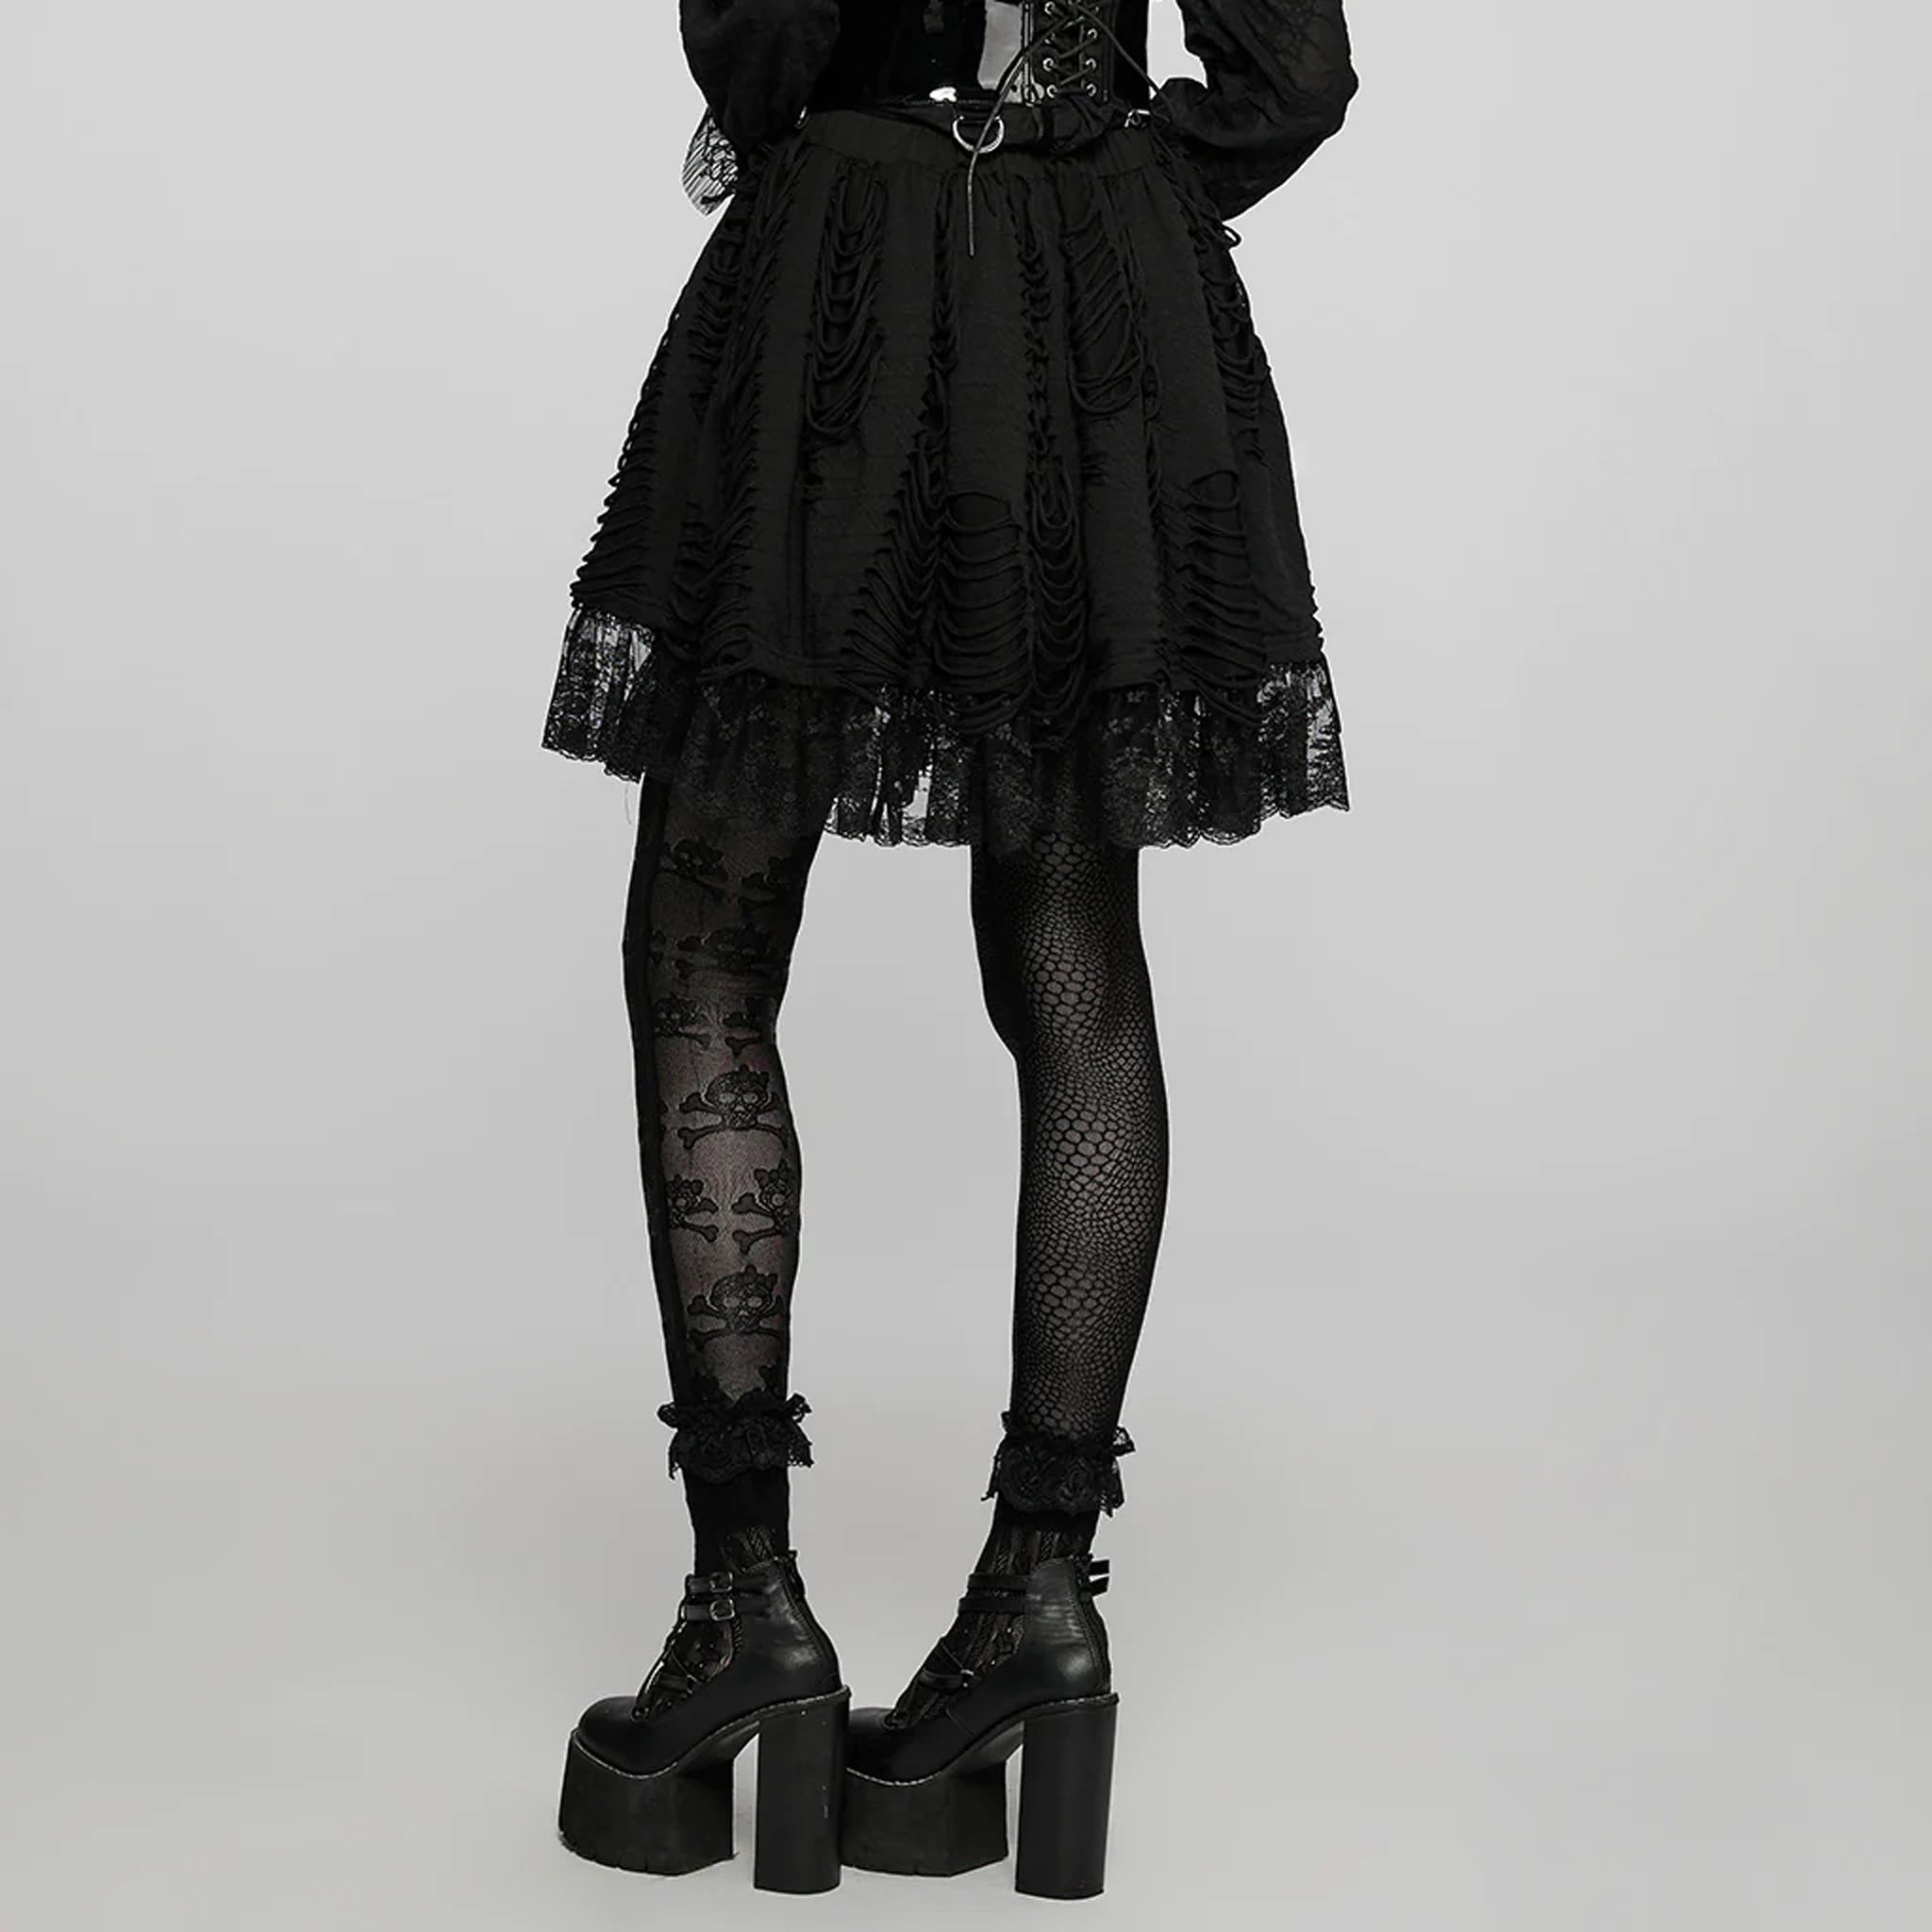 Edgy Lolita Skirt